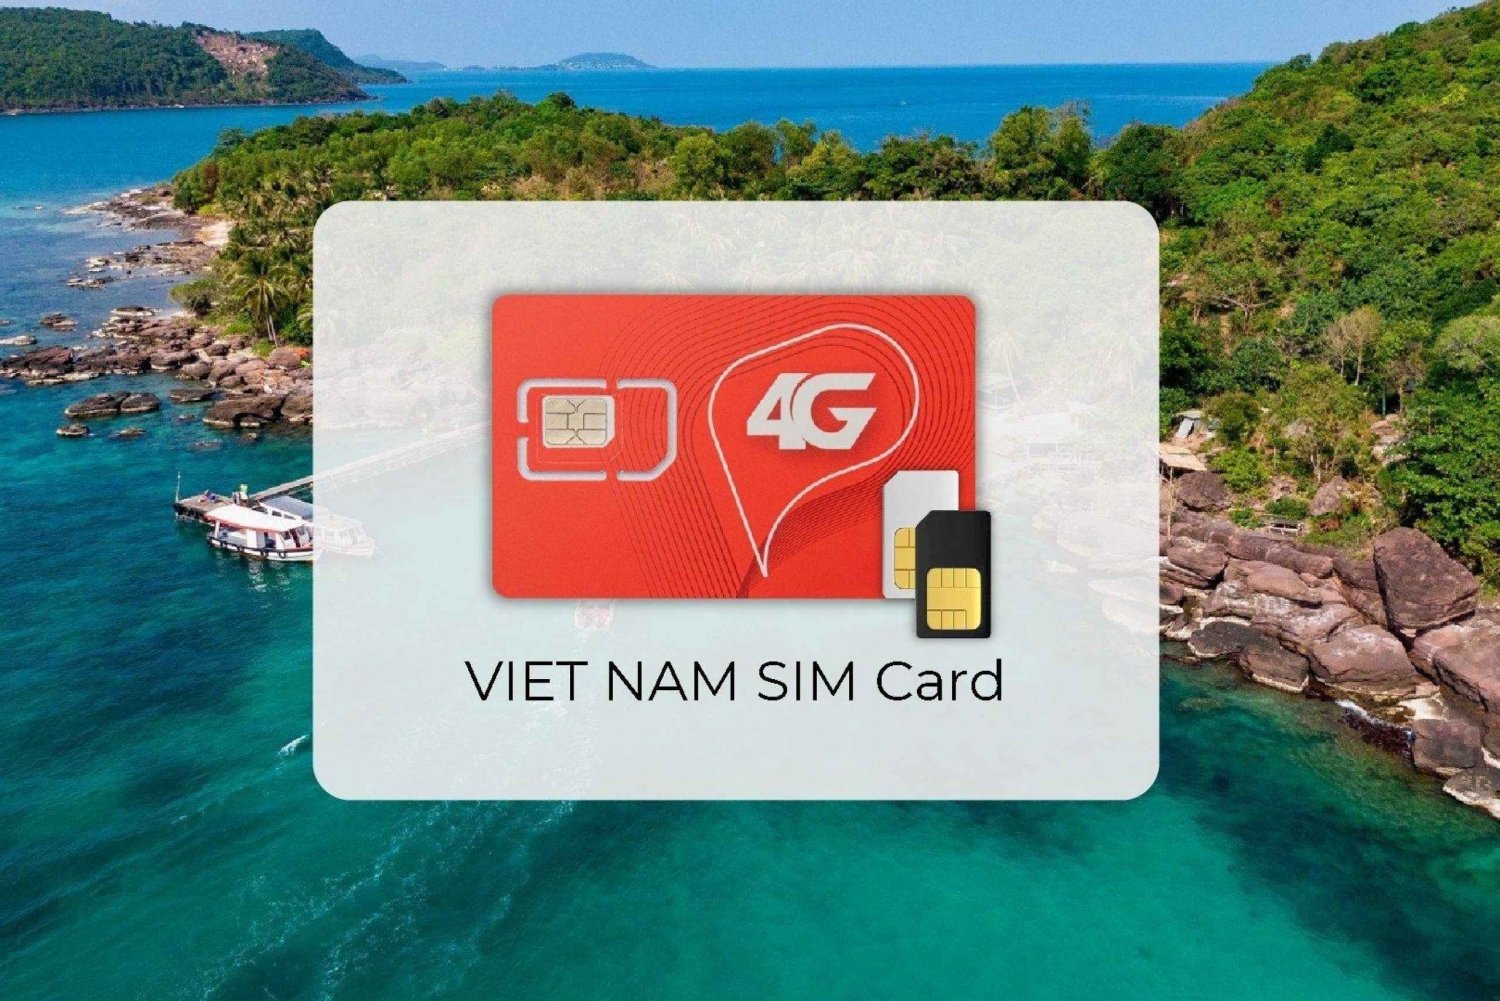 Hanoi: Tourist SIM Card with Mobile Data 4G by Viettel